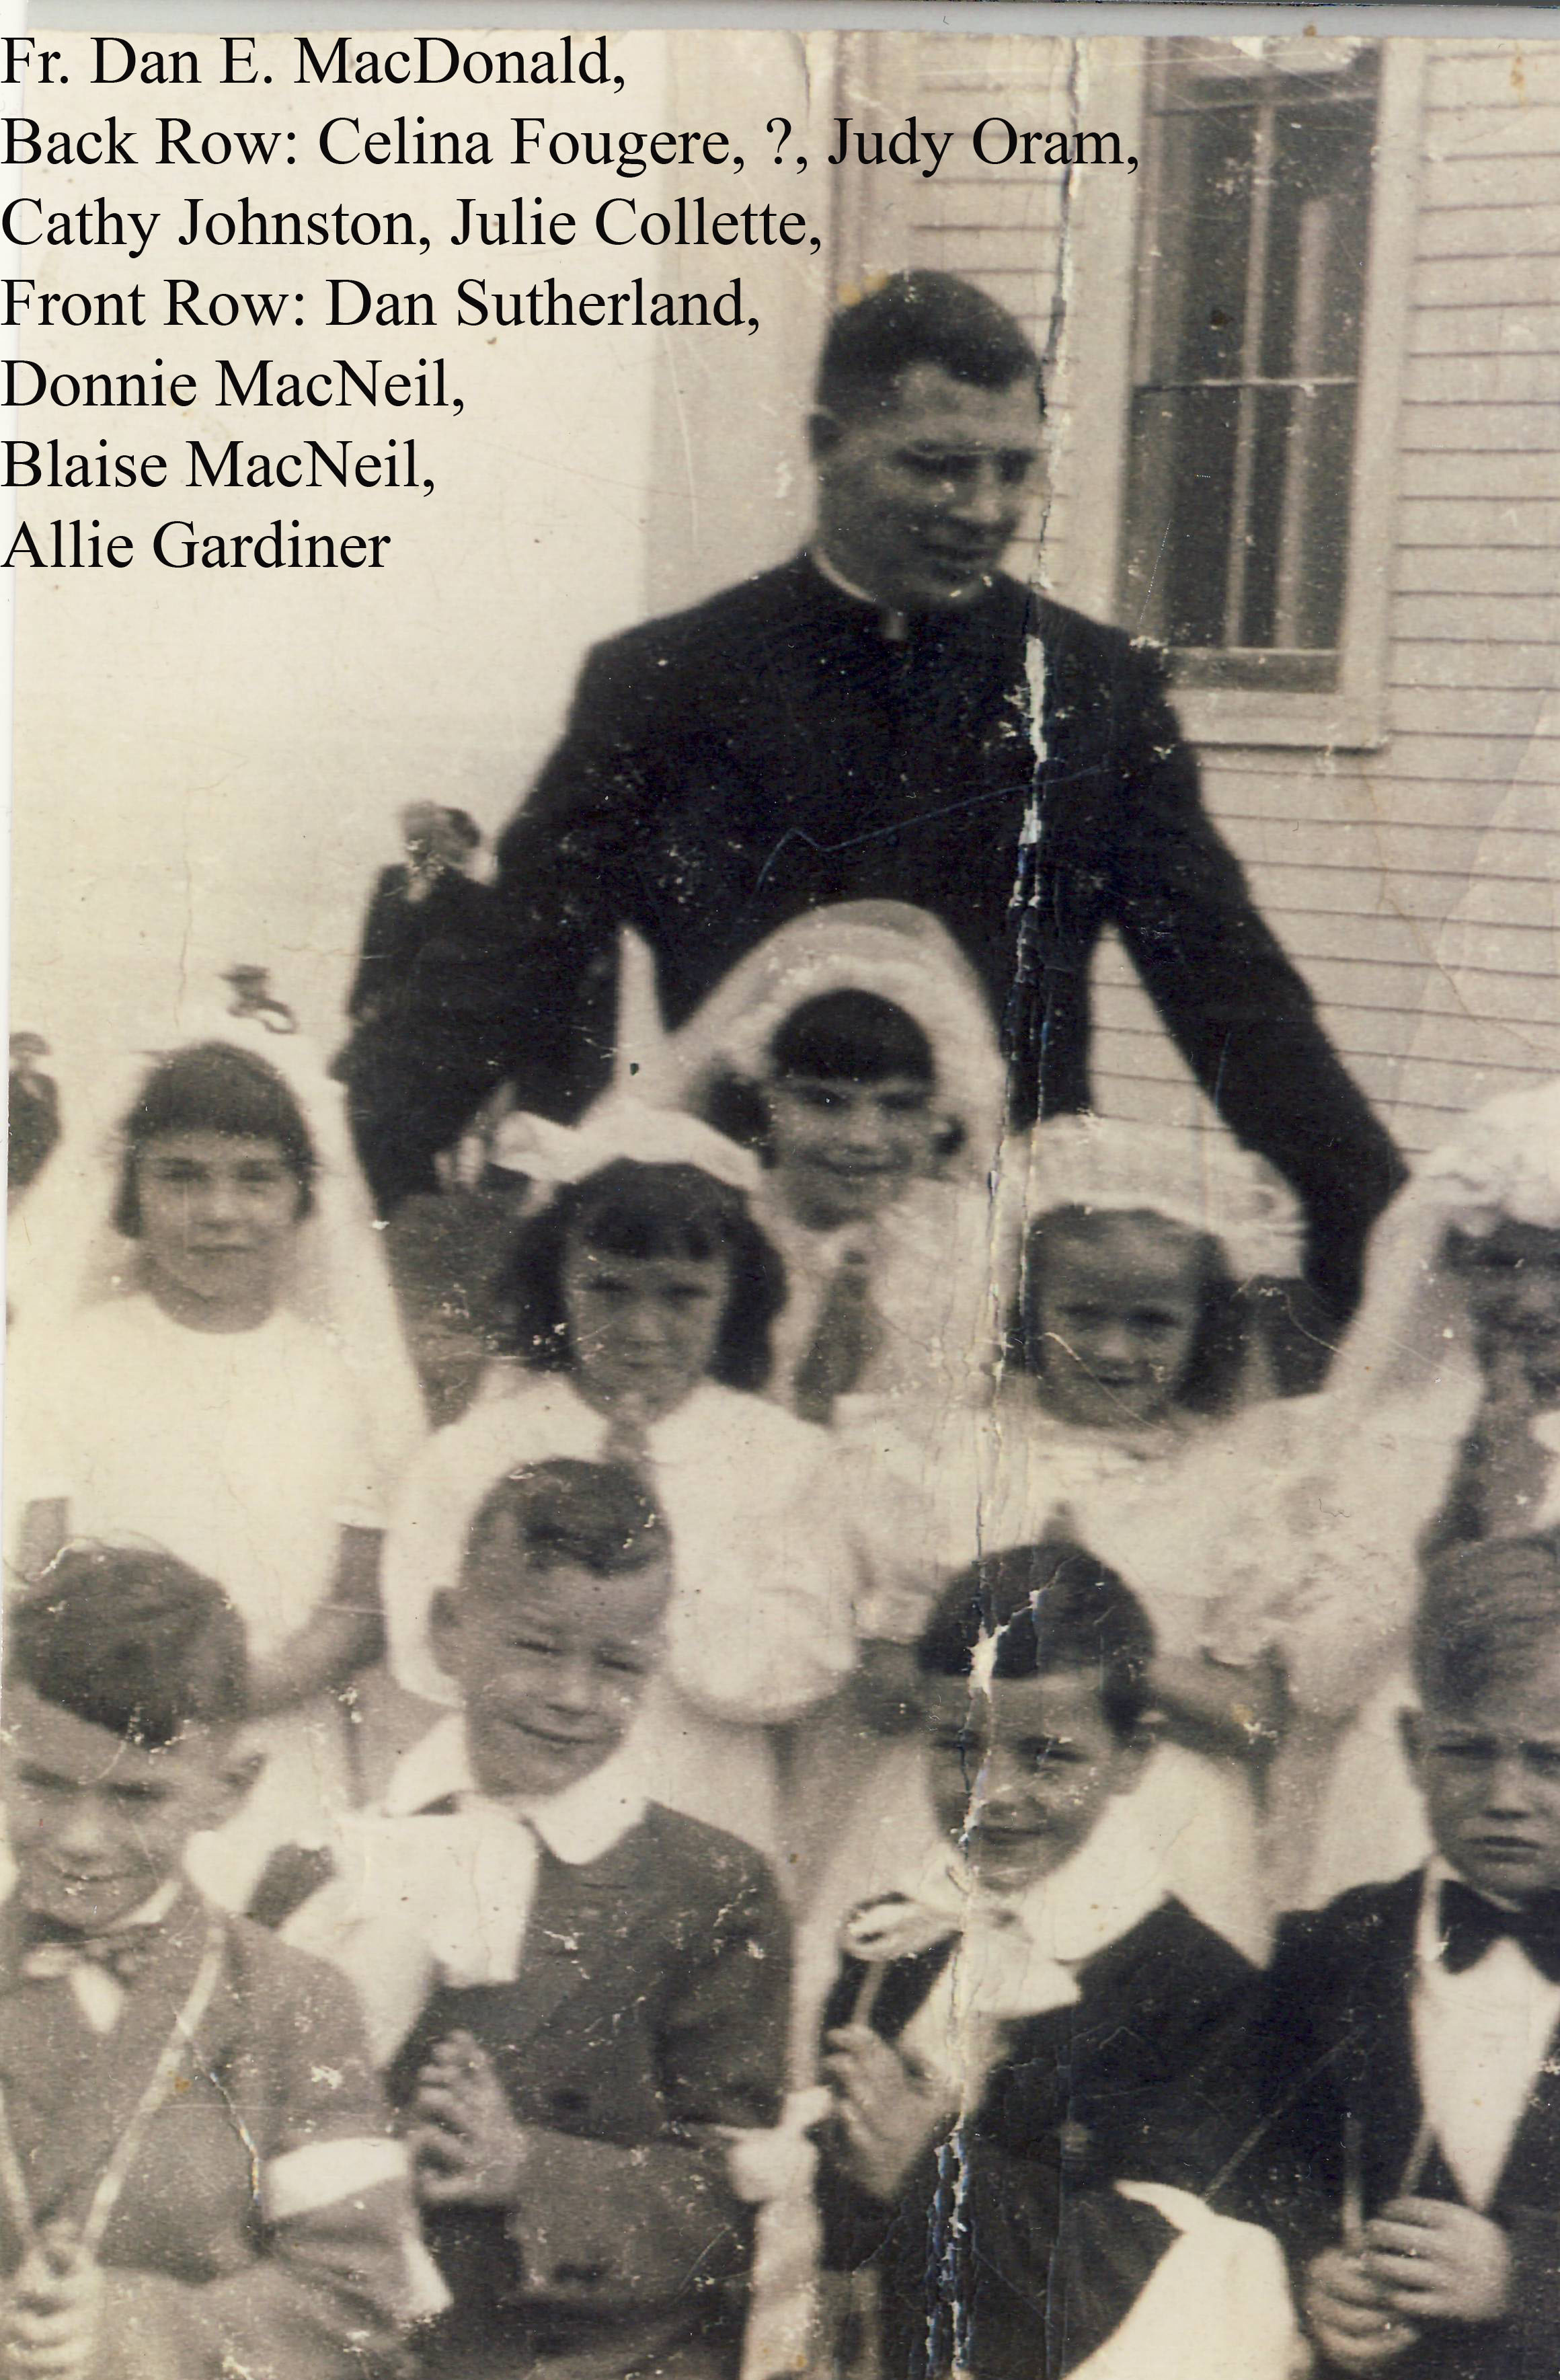 Fr. Dan E MacDonald and Communion Class